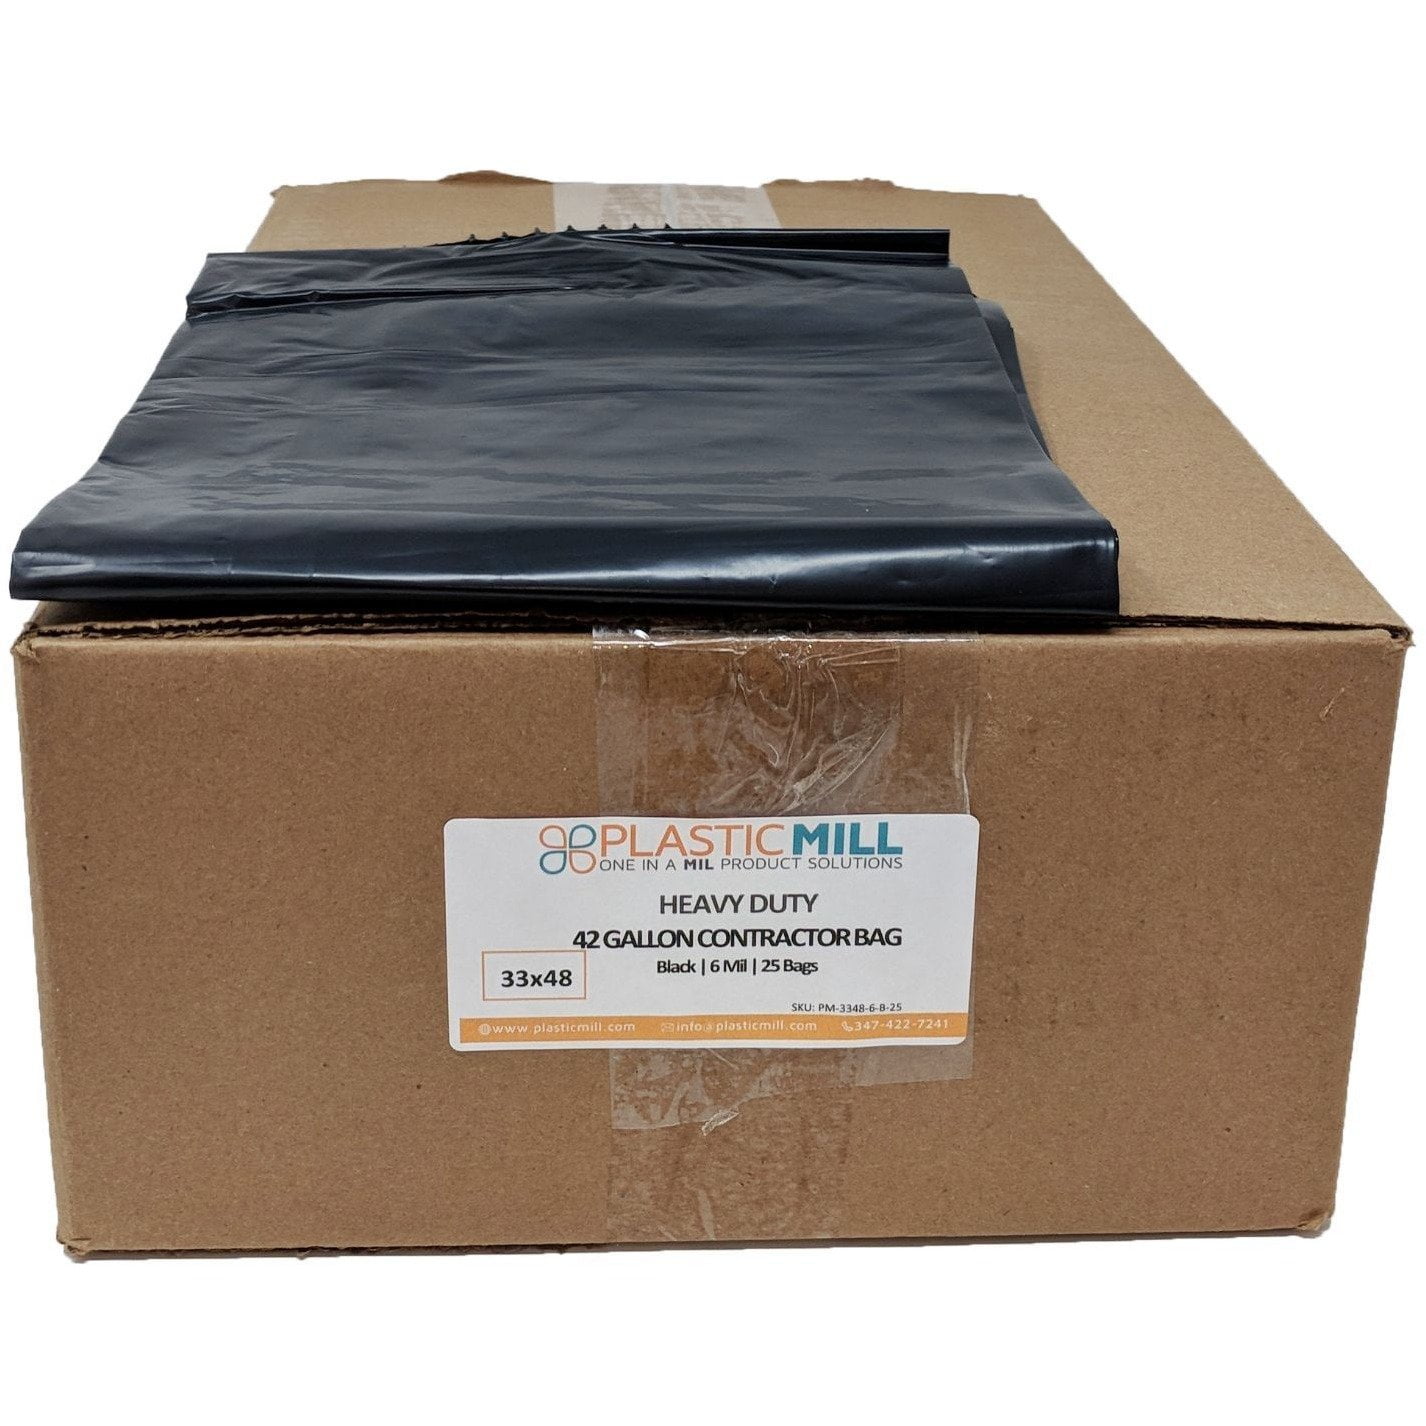 PlasticMill 95 Gallon Garbage Bags: Black 1.2 Mil 61x68 50 BAGS.